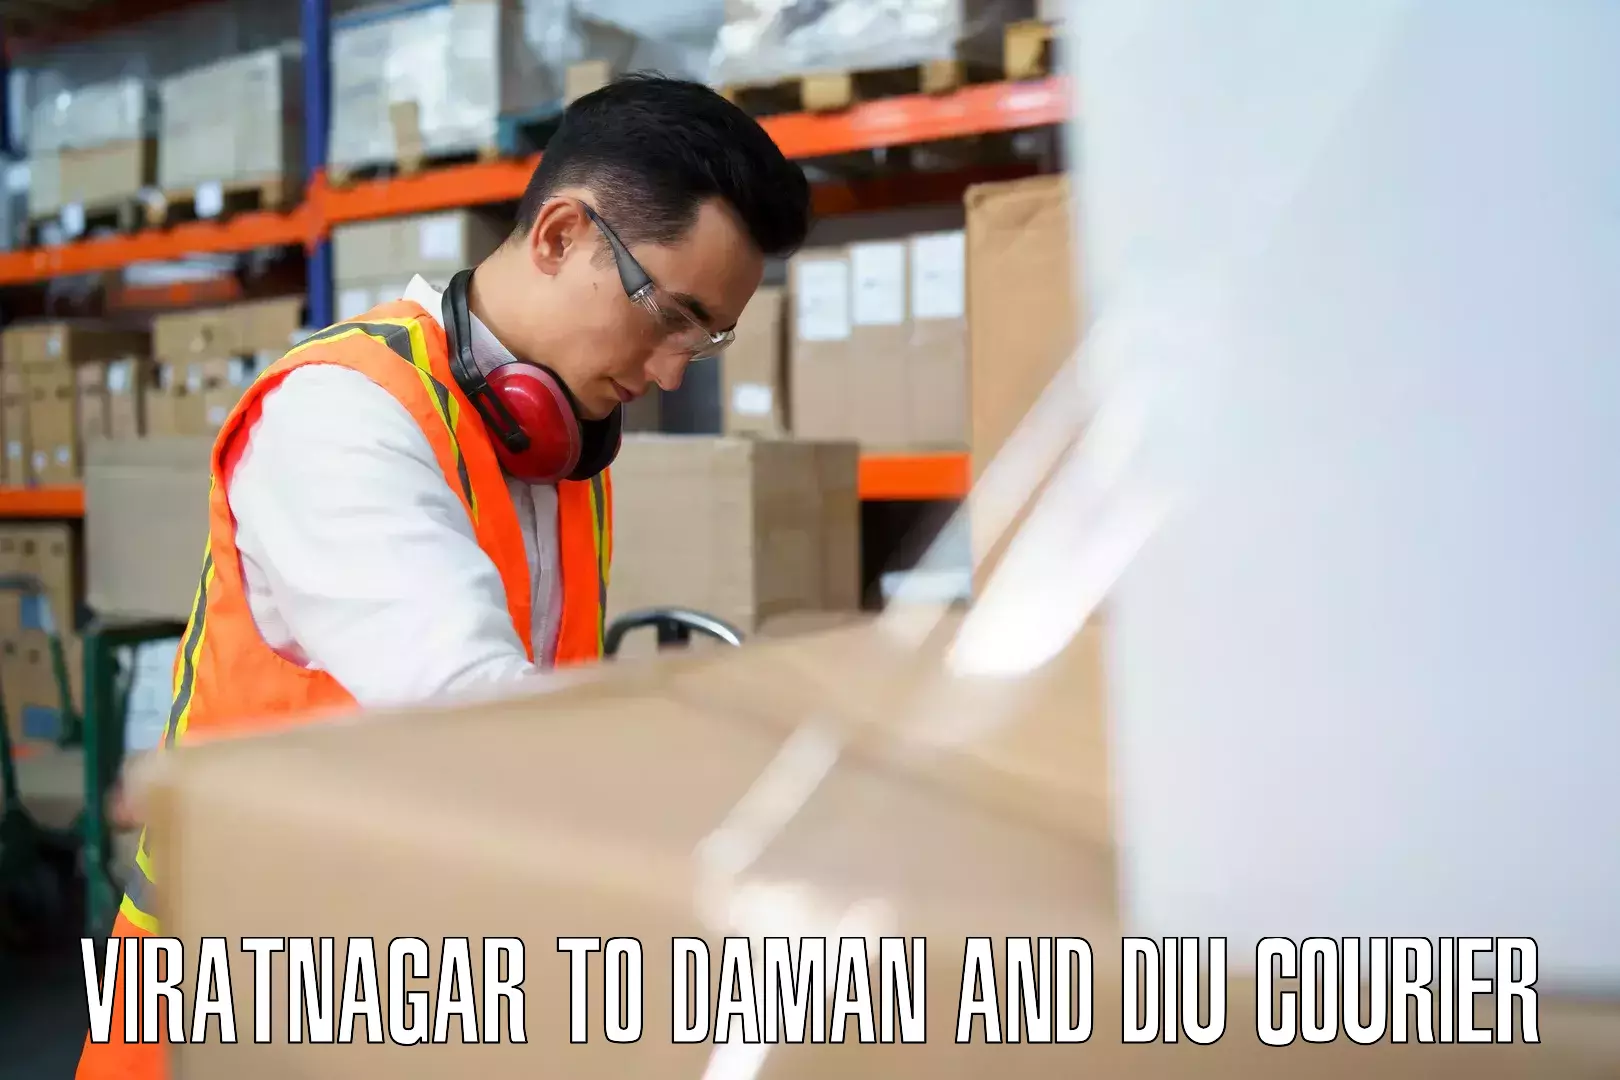 Luggage delivery app Viratnagar to Daman and Diu